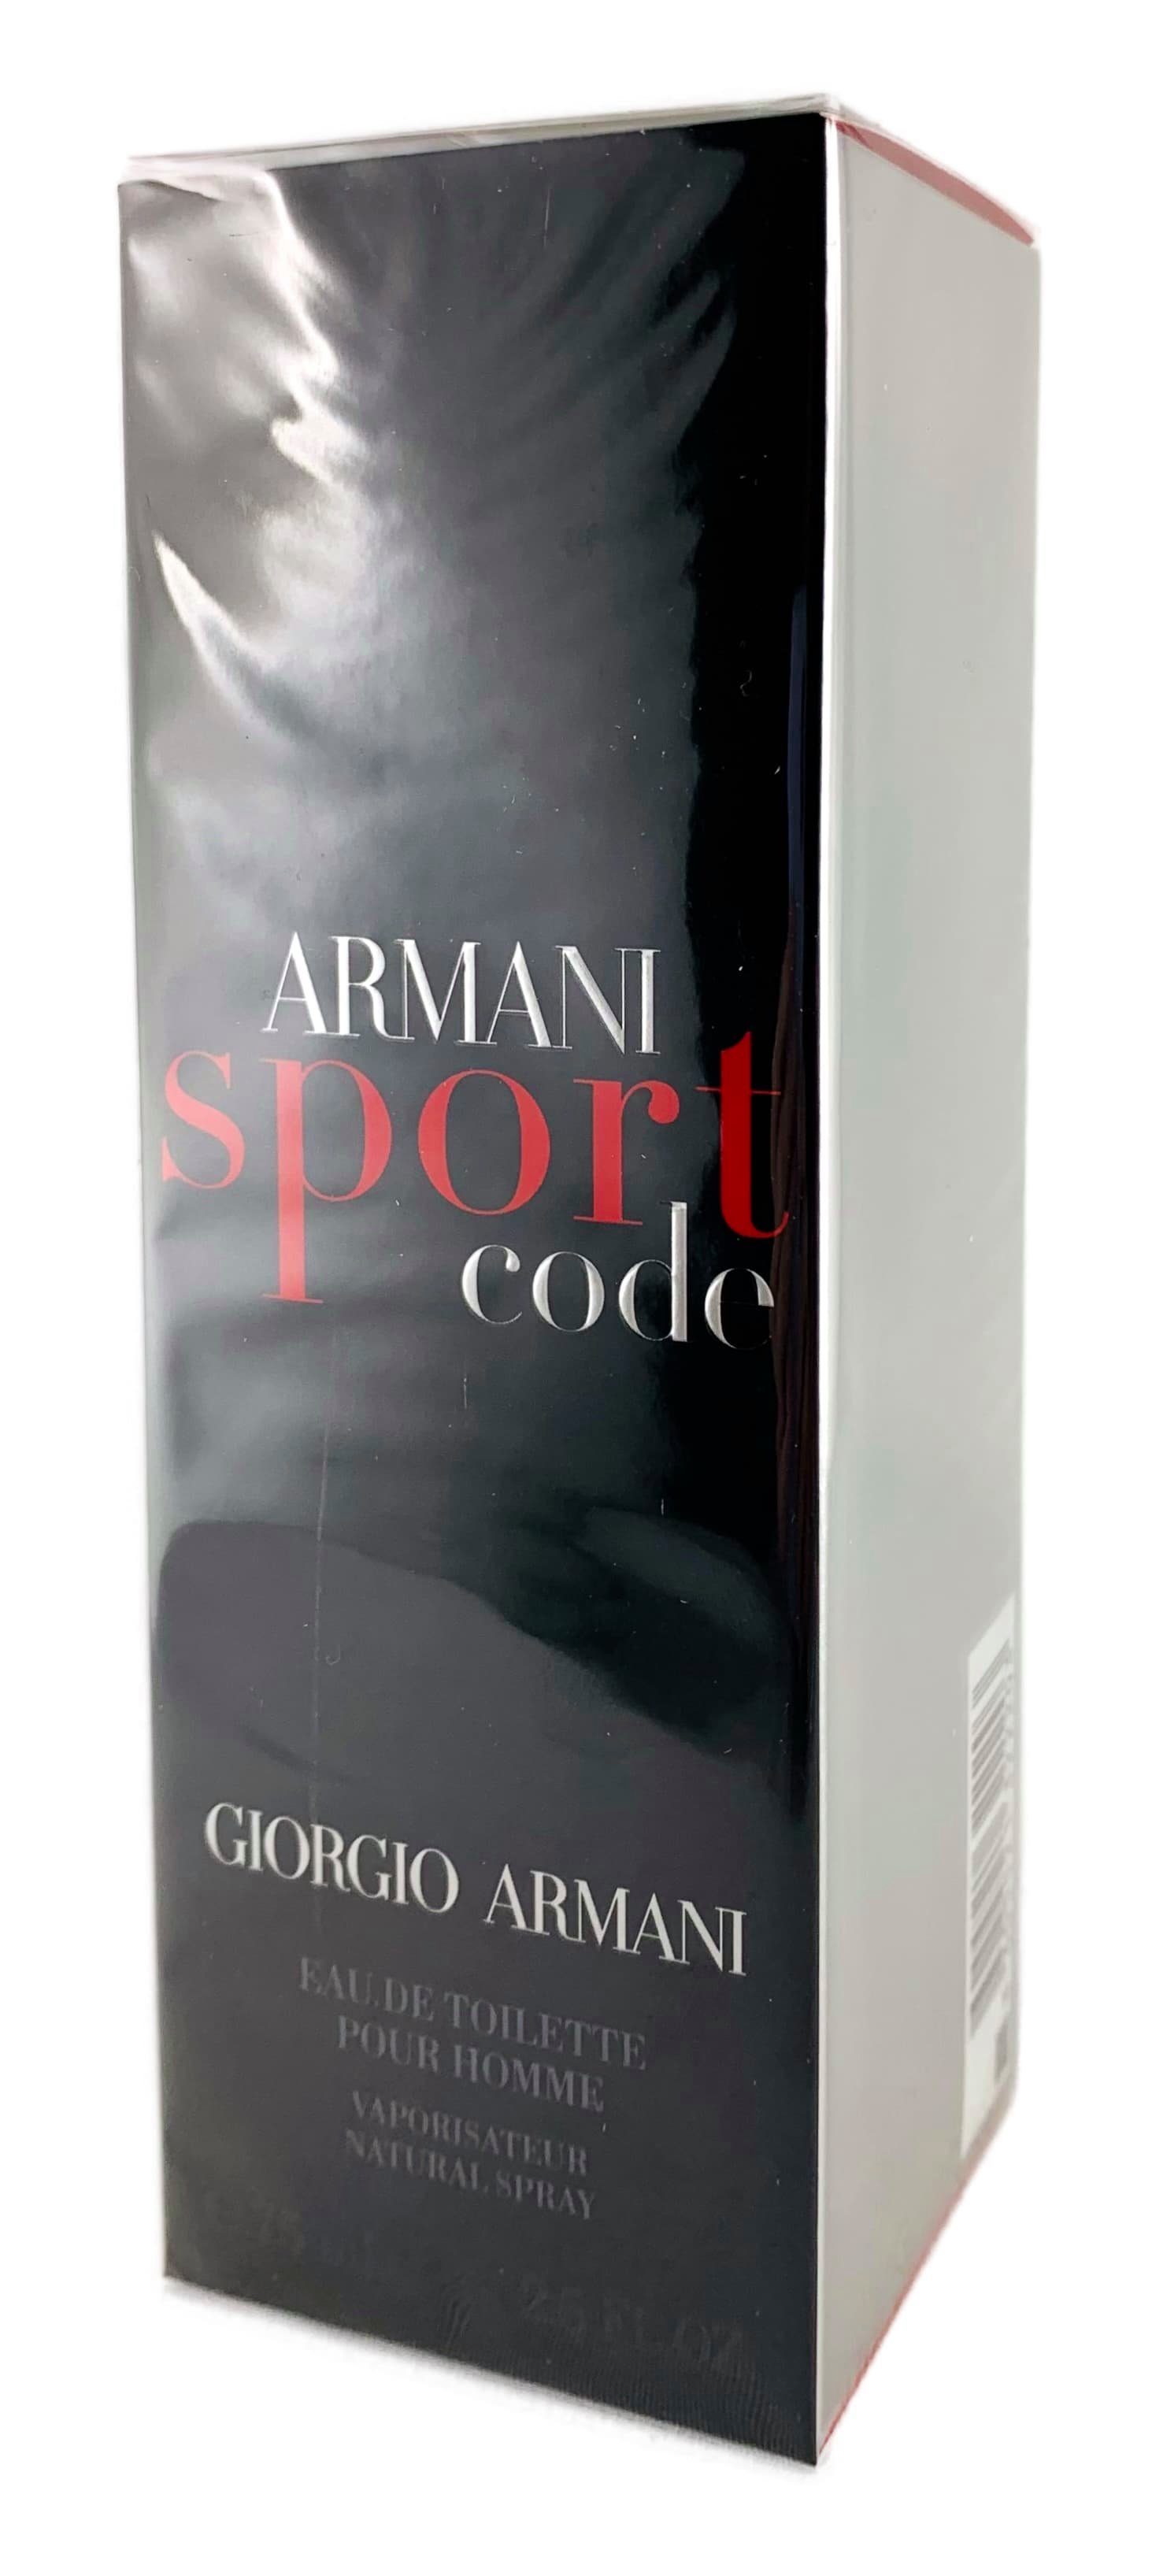 Giorgio Armani Eau de Toilette Armani "Sport Code" Edt Spray 75 ml | Eau de Toilette